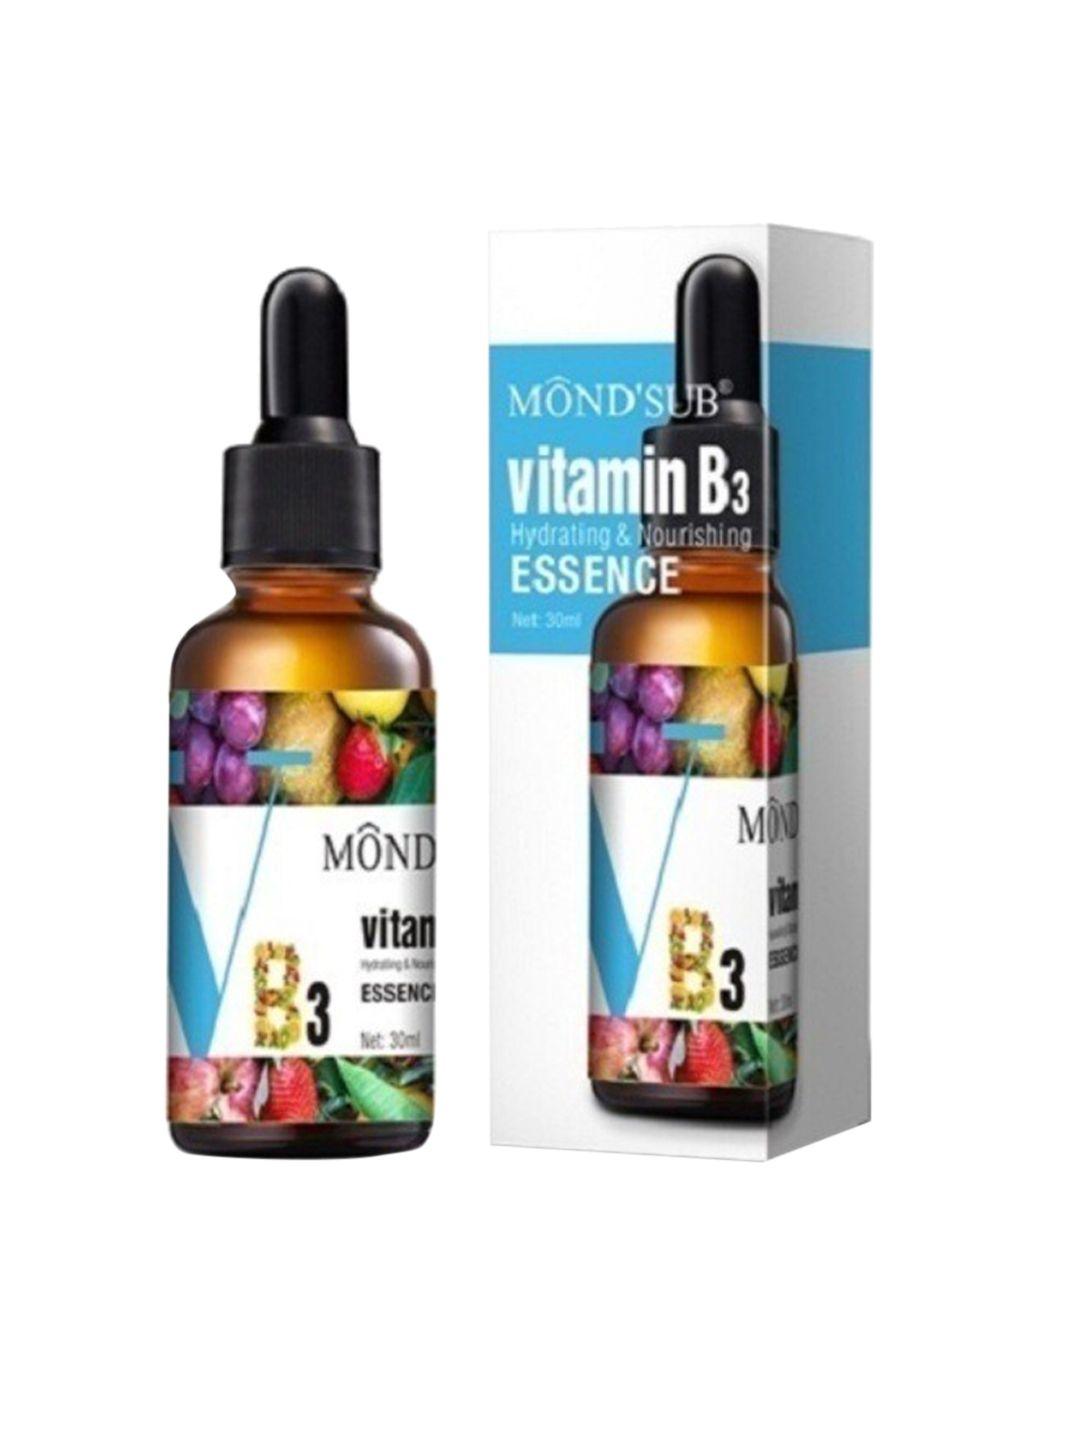 mondsub vitamin b3 hydrating essence 30ml